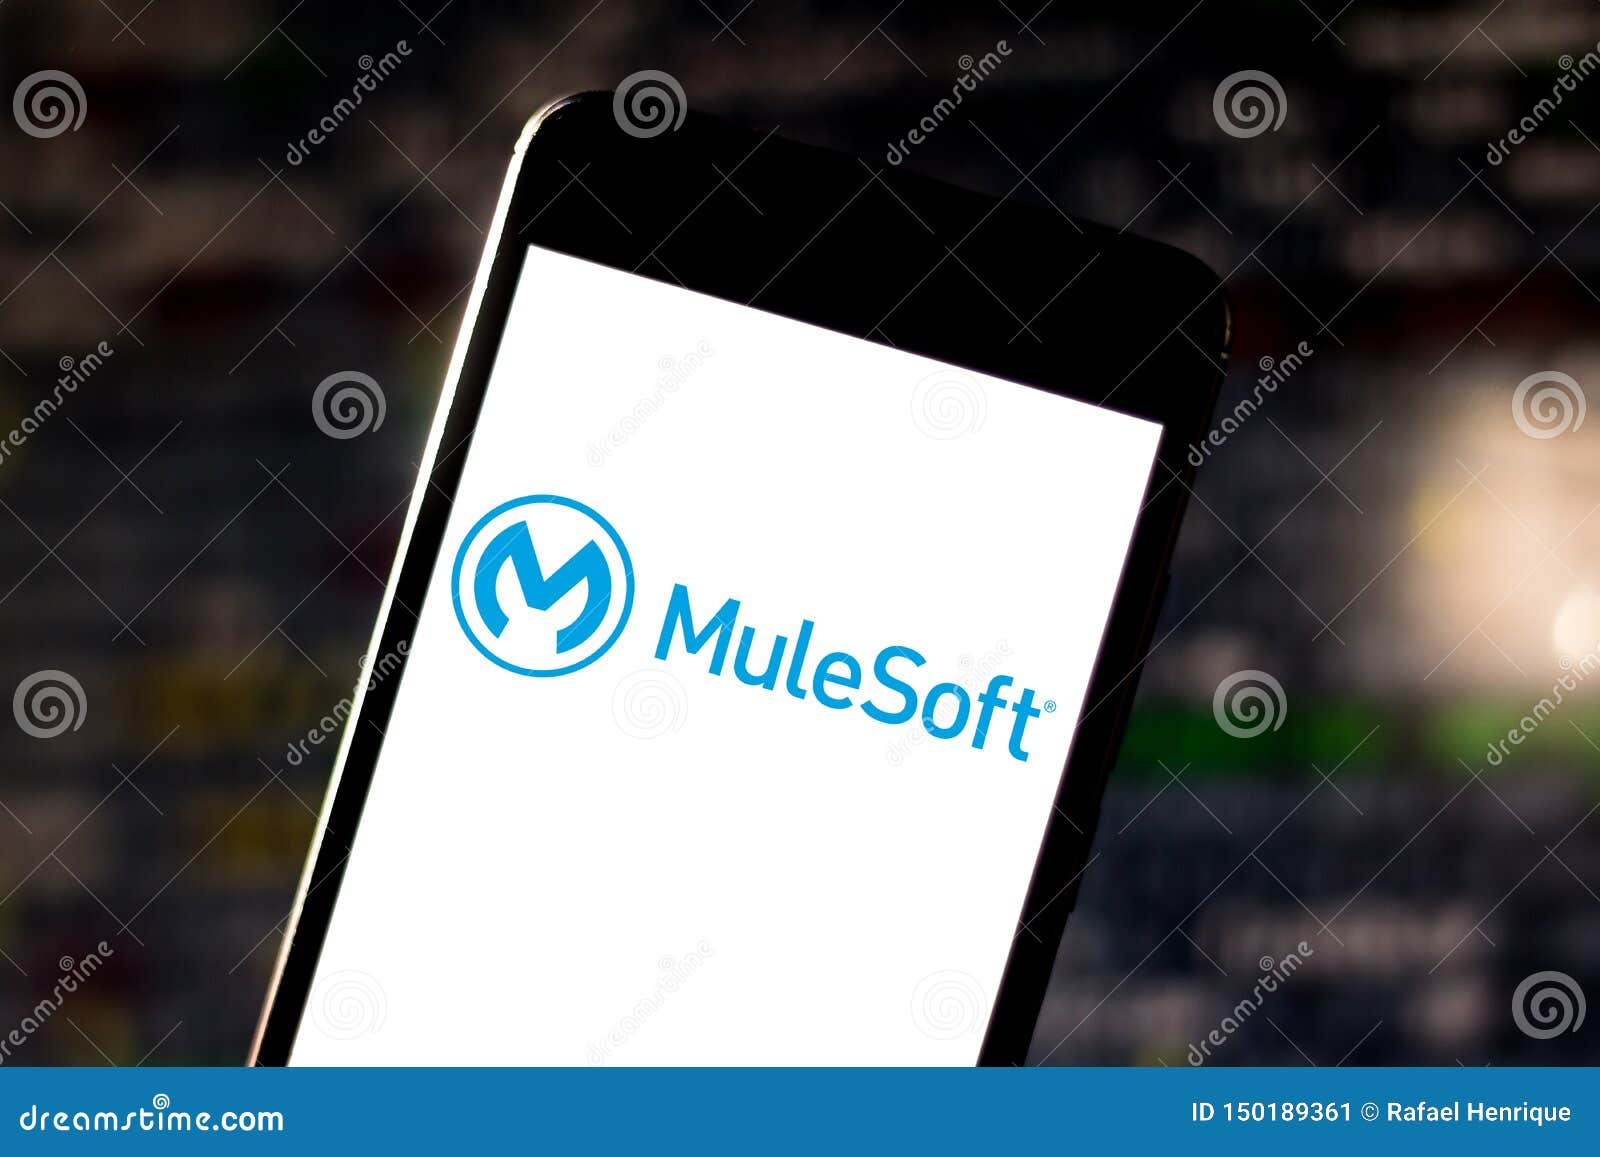 MuleSoft Explained in 1 Min | What is MuleSoft? | MuleSoft Uses #shorts |  MindMajix - YouTube